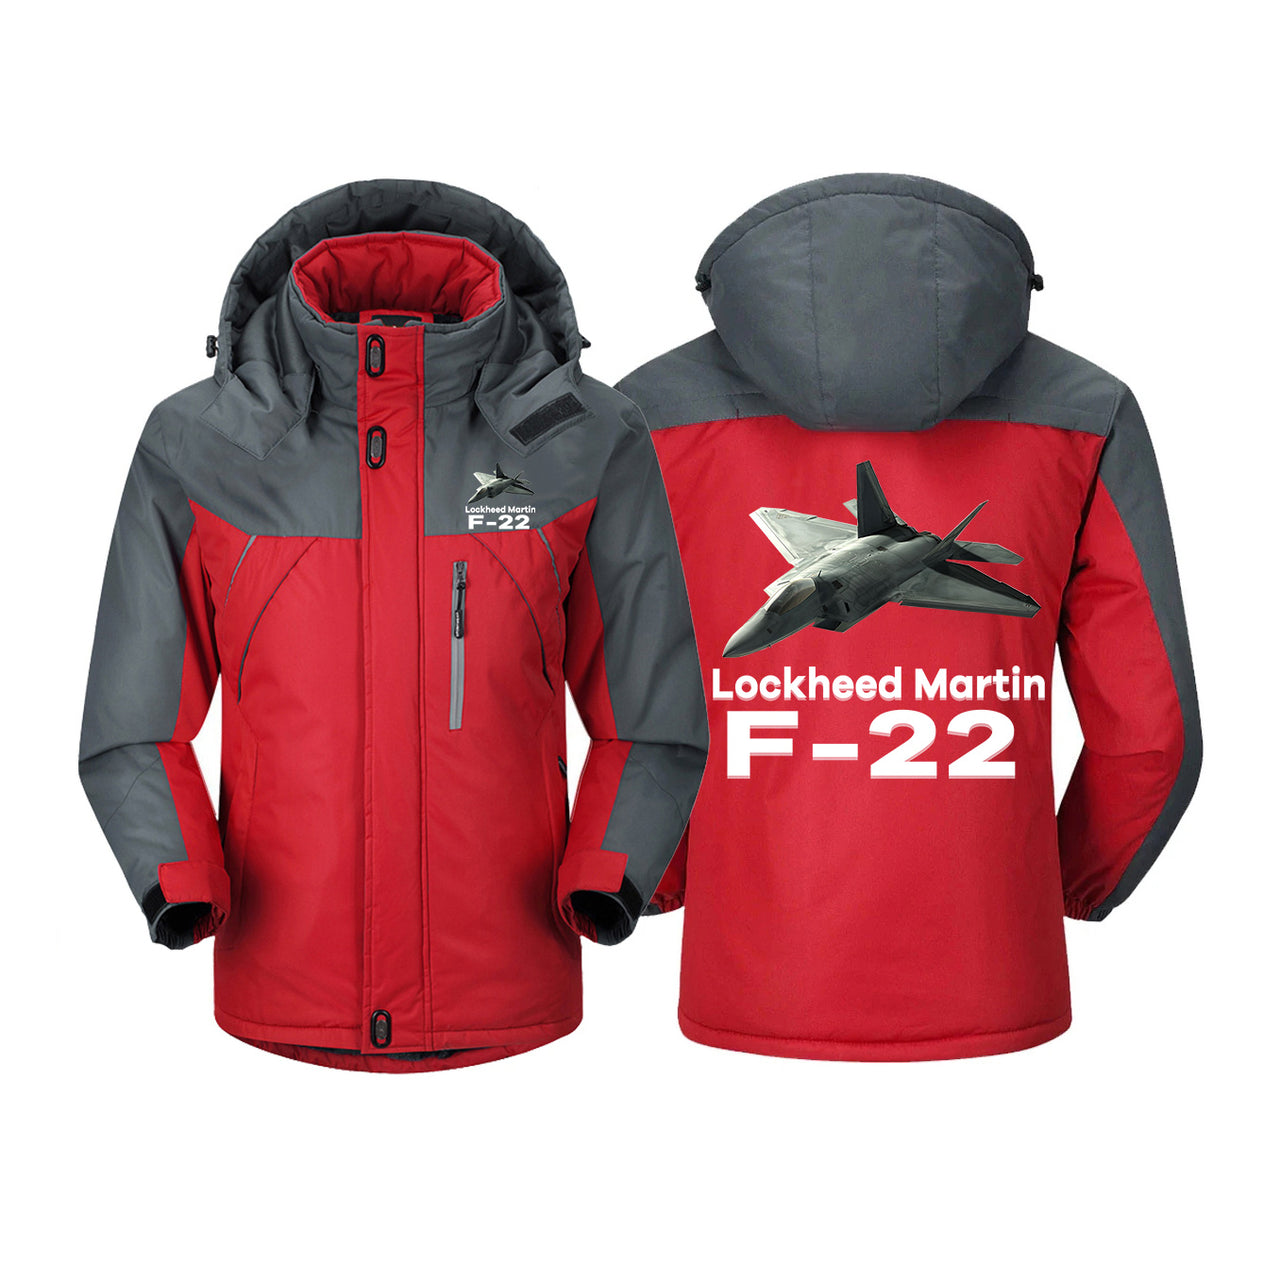 The Lockheed Martin F22 Designed Thick Winter Jackets